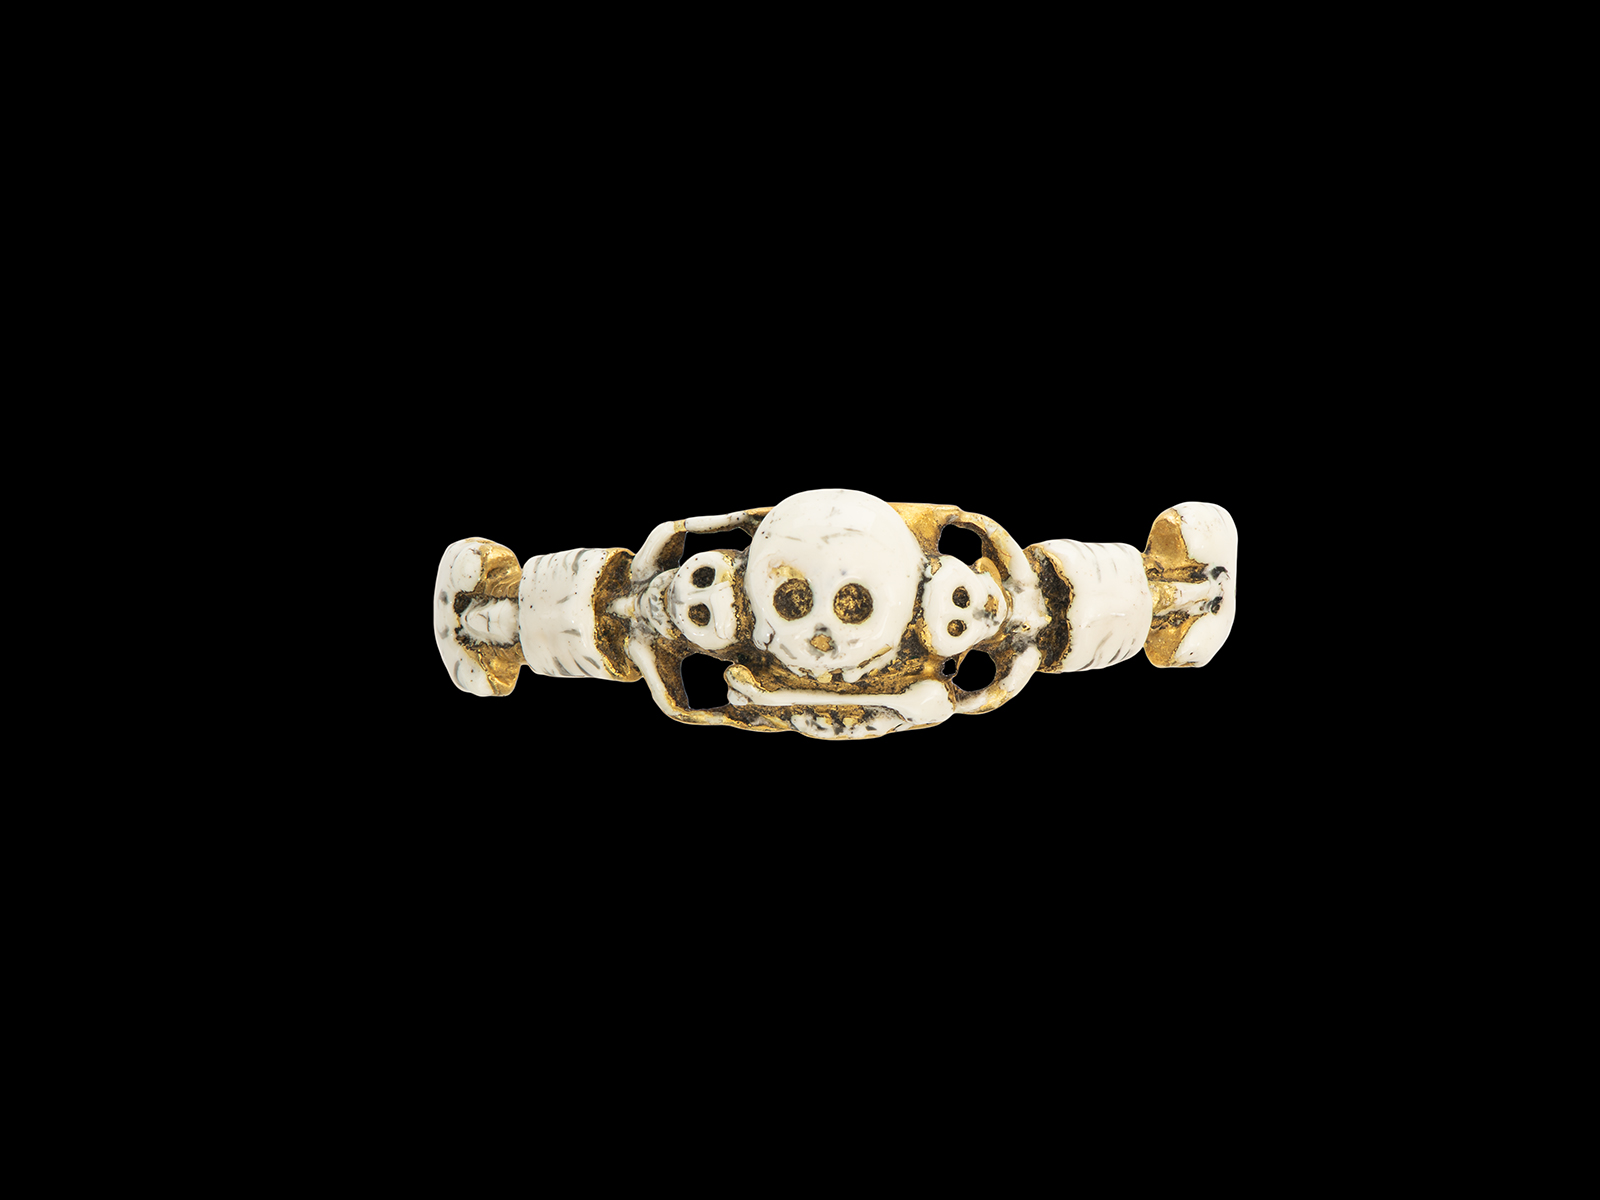 Skulls and Skeletons – Swiss National Museum - Swiss history blog